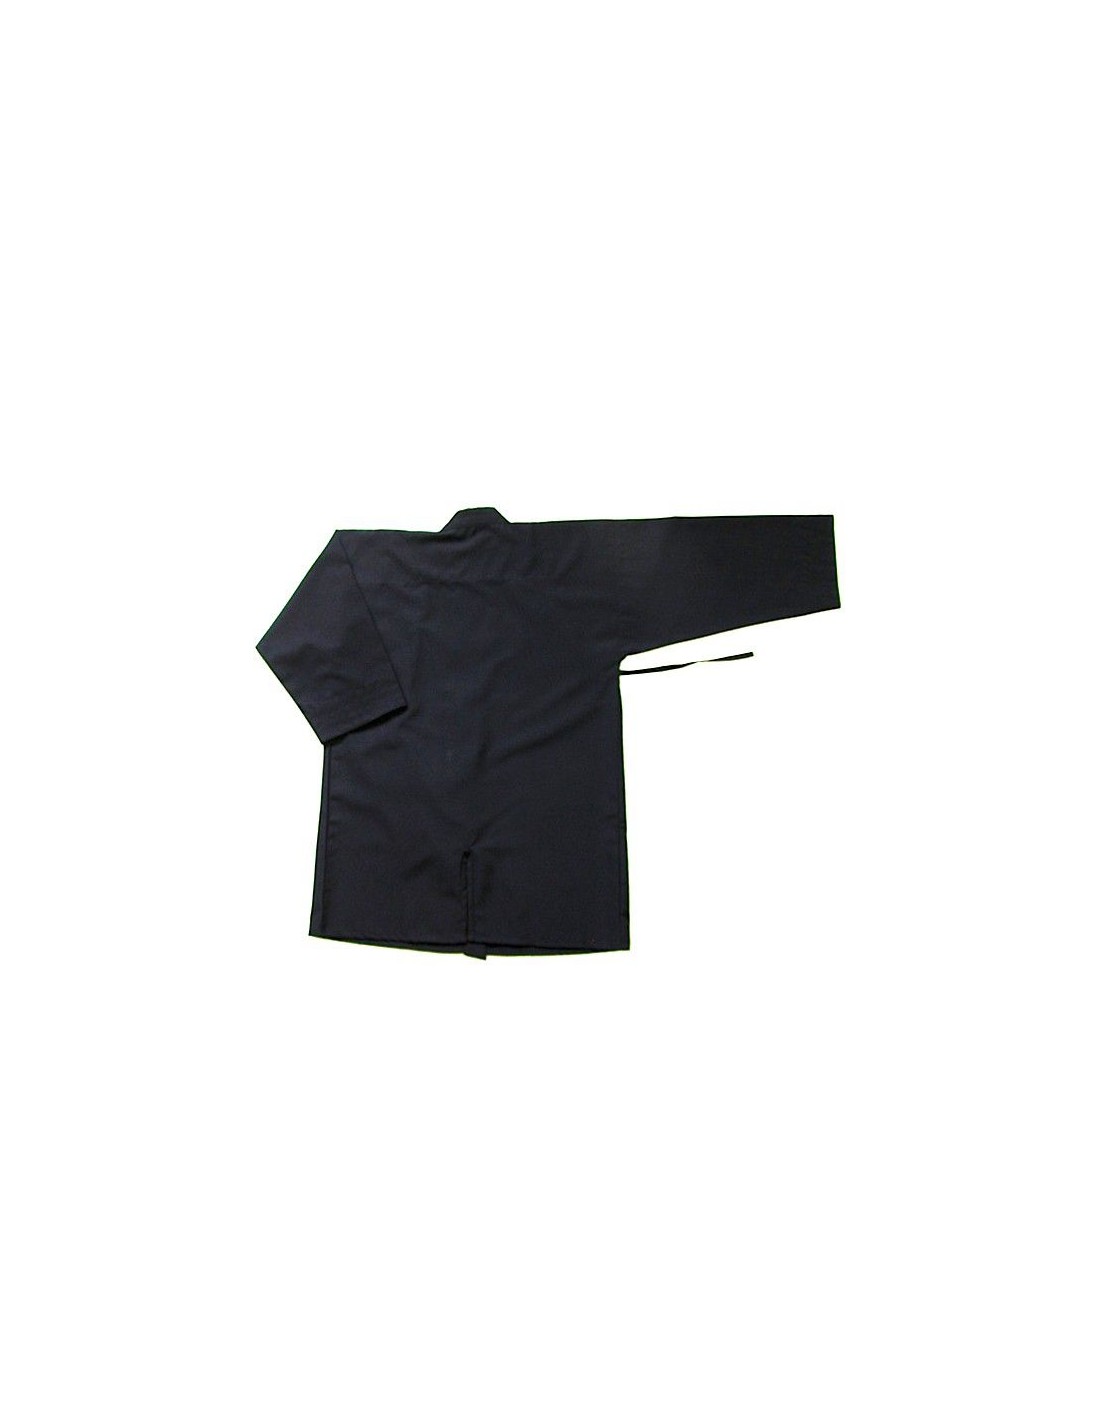 Toray Tetrex Iaido Gi Uniform black Tozando Size 2